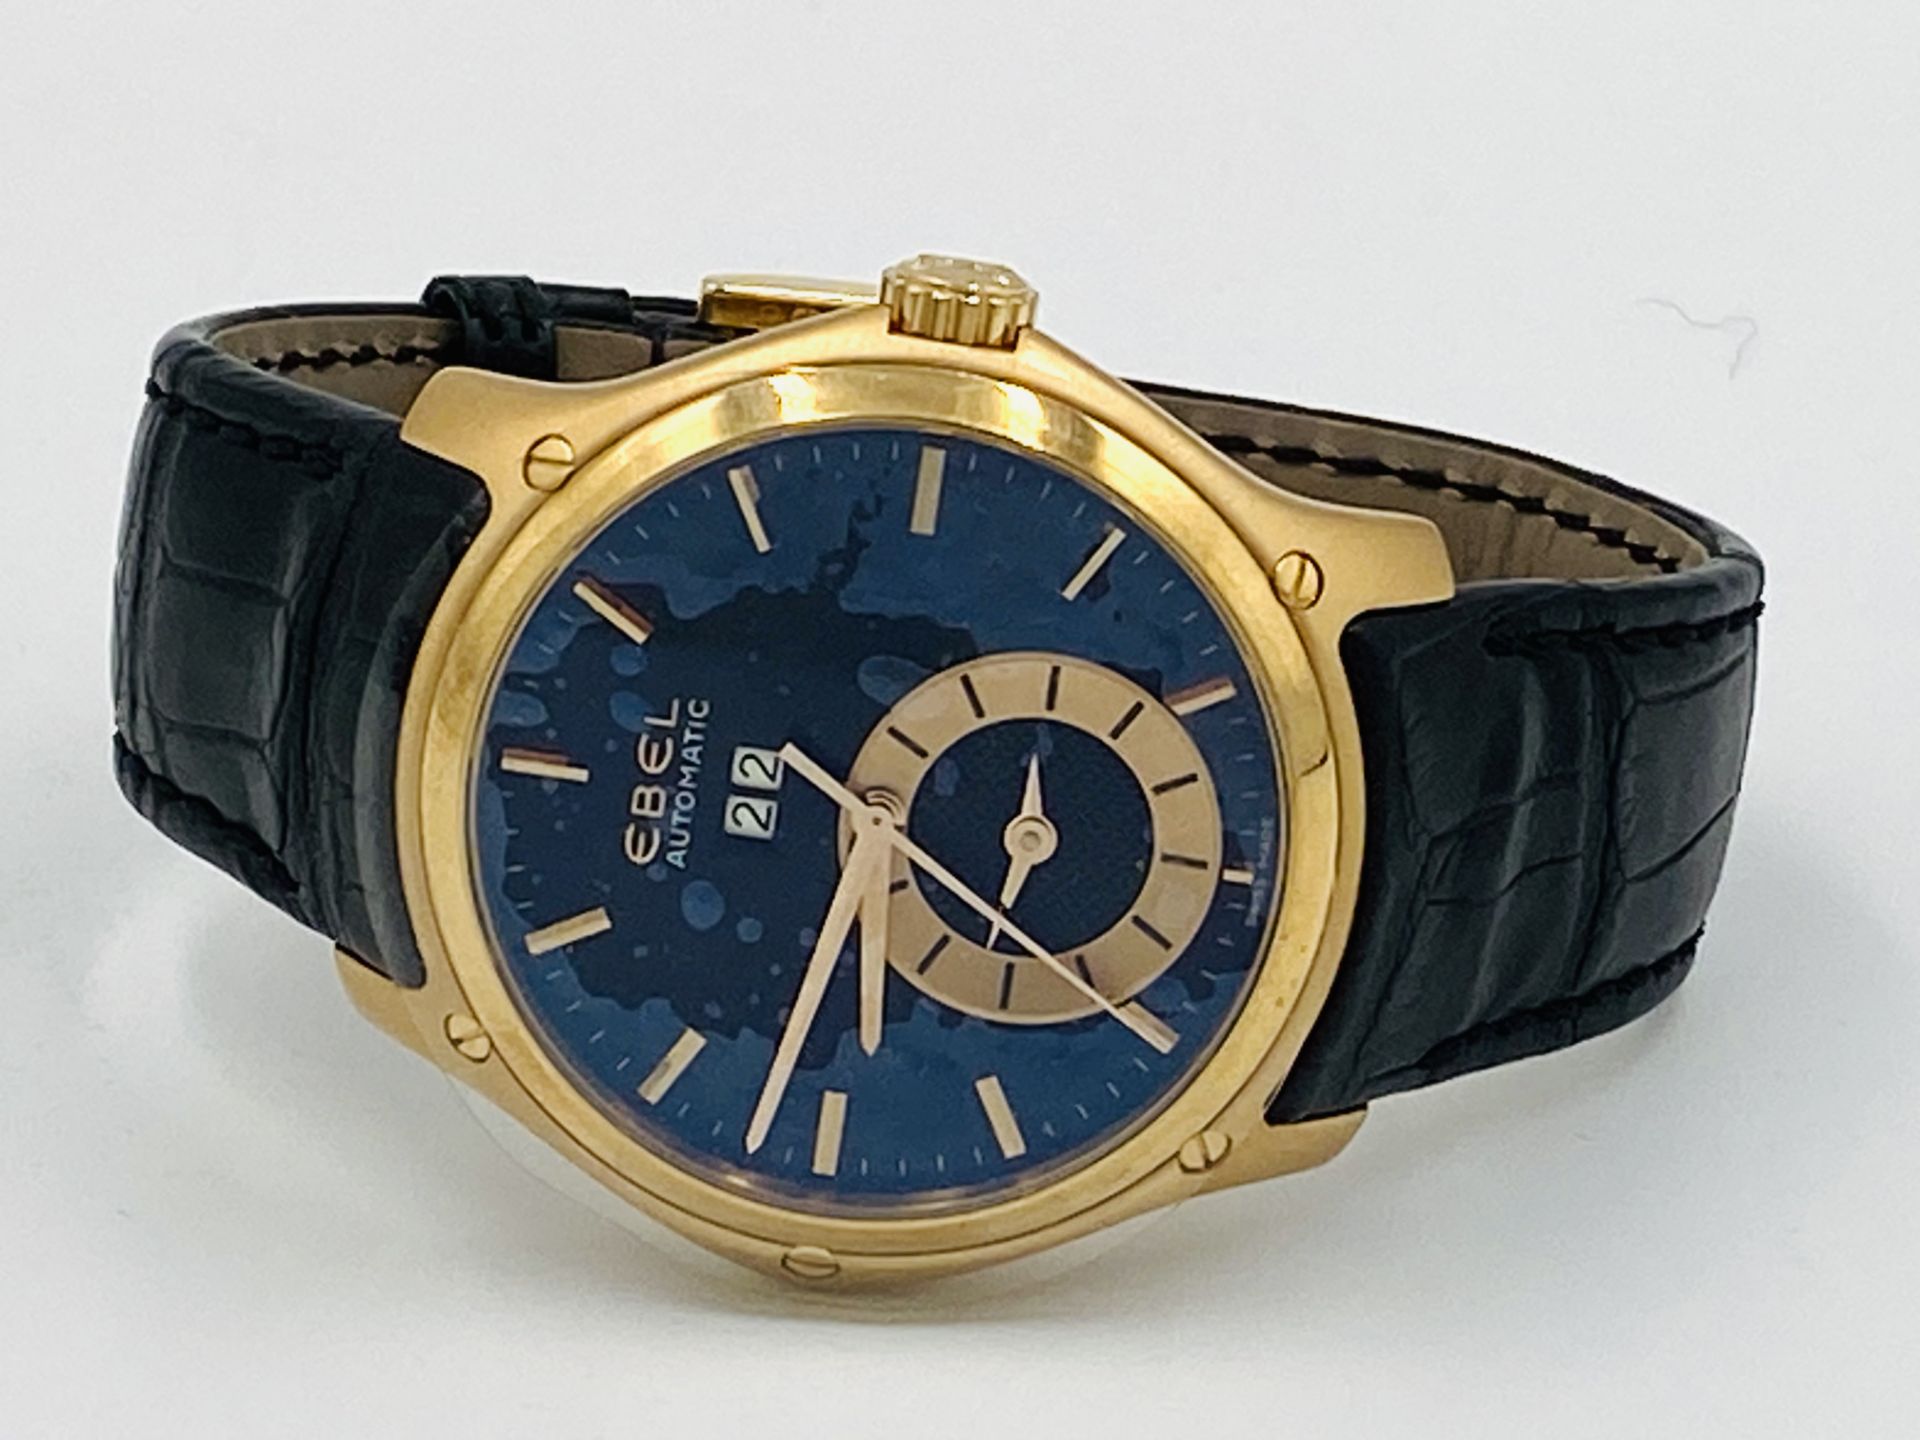 18ct gold Ebel wrist watch